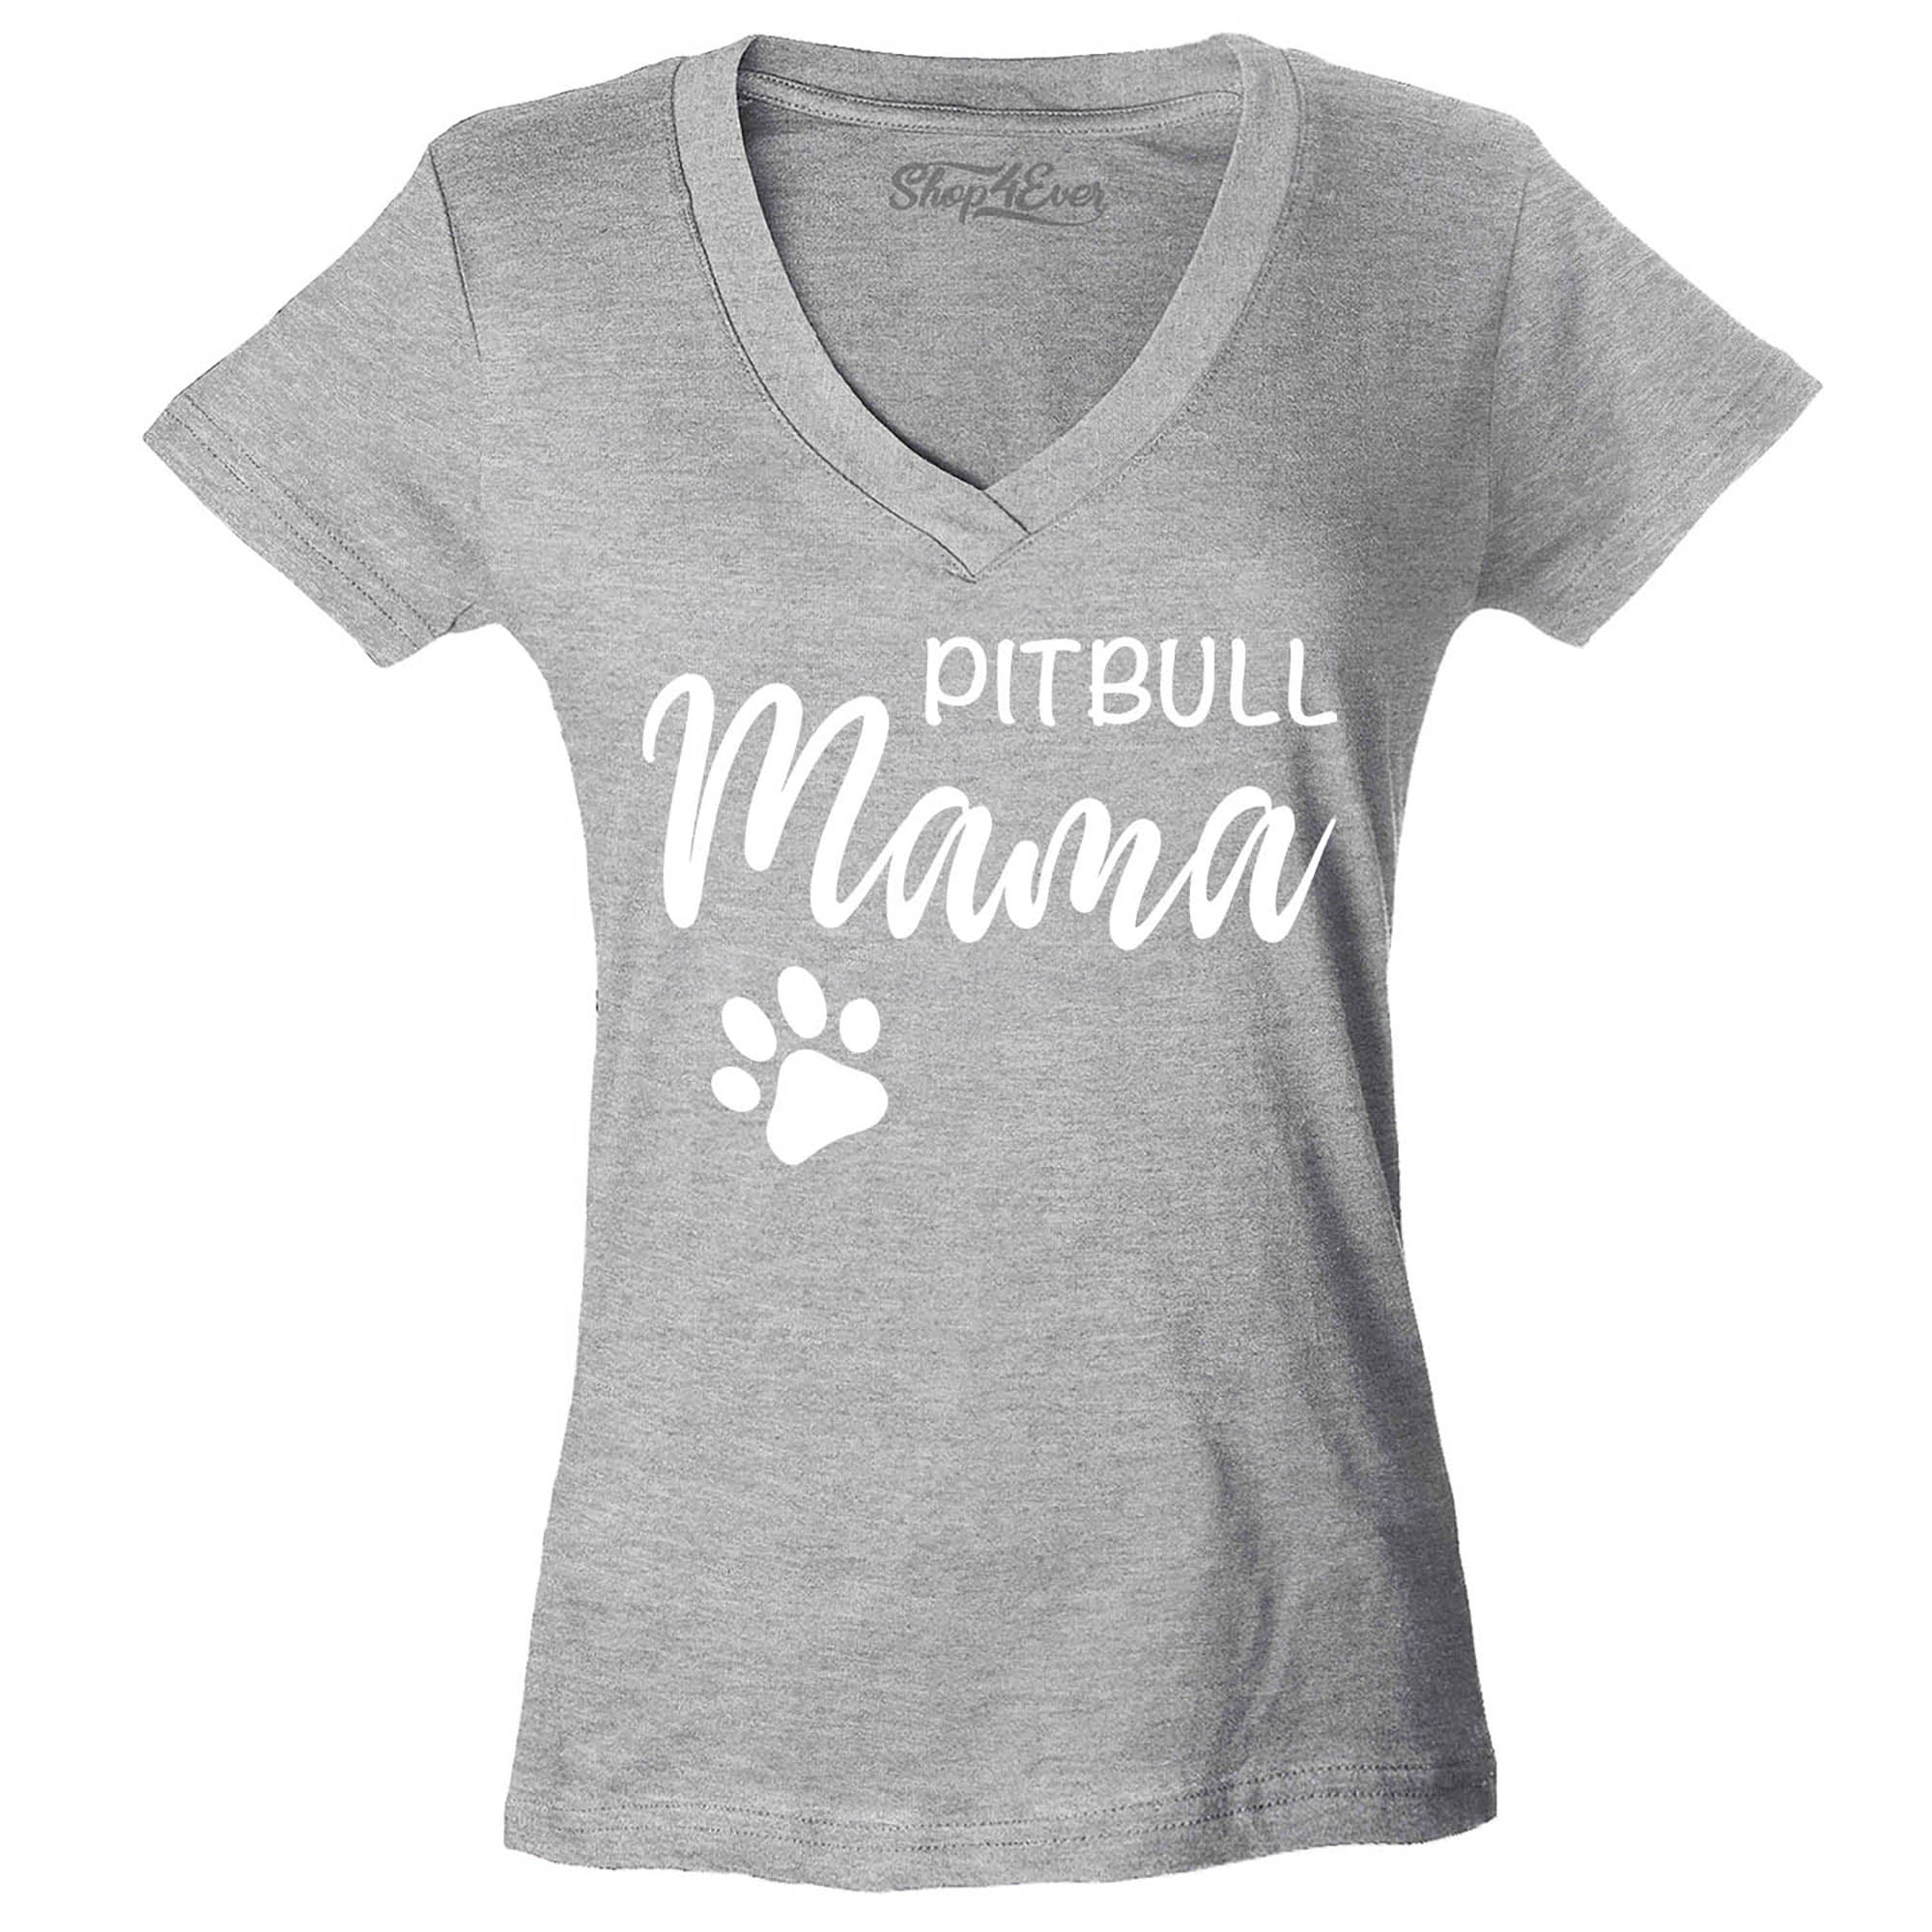 Pitbull Mama Women's V-Neck T-Shirt Slim Fit